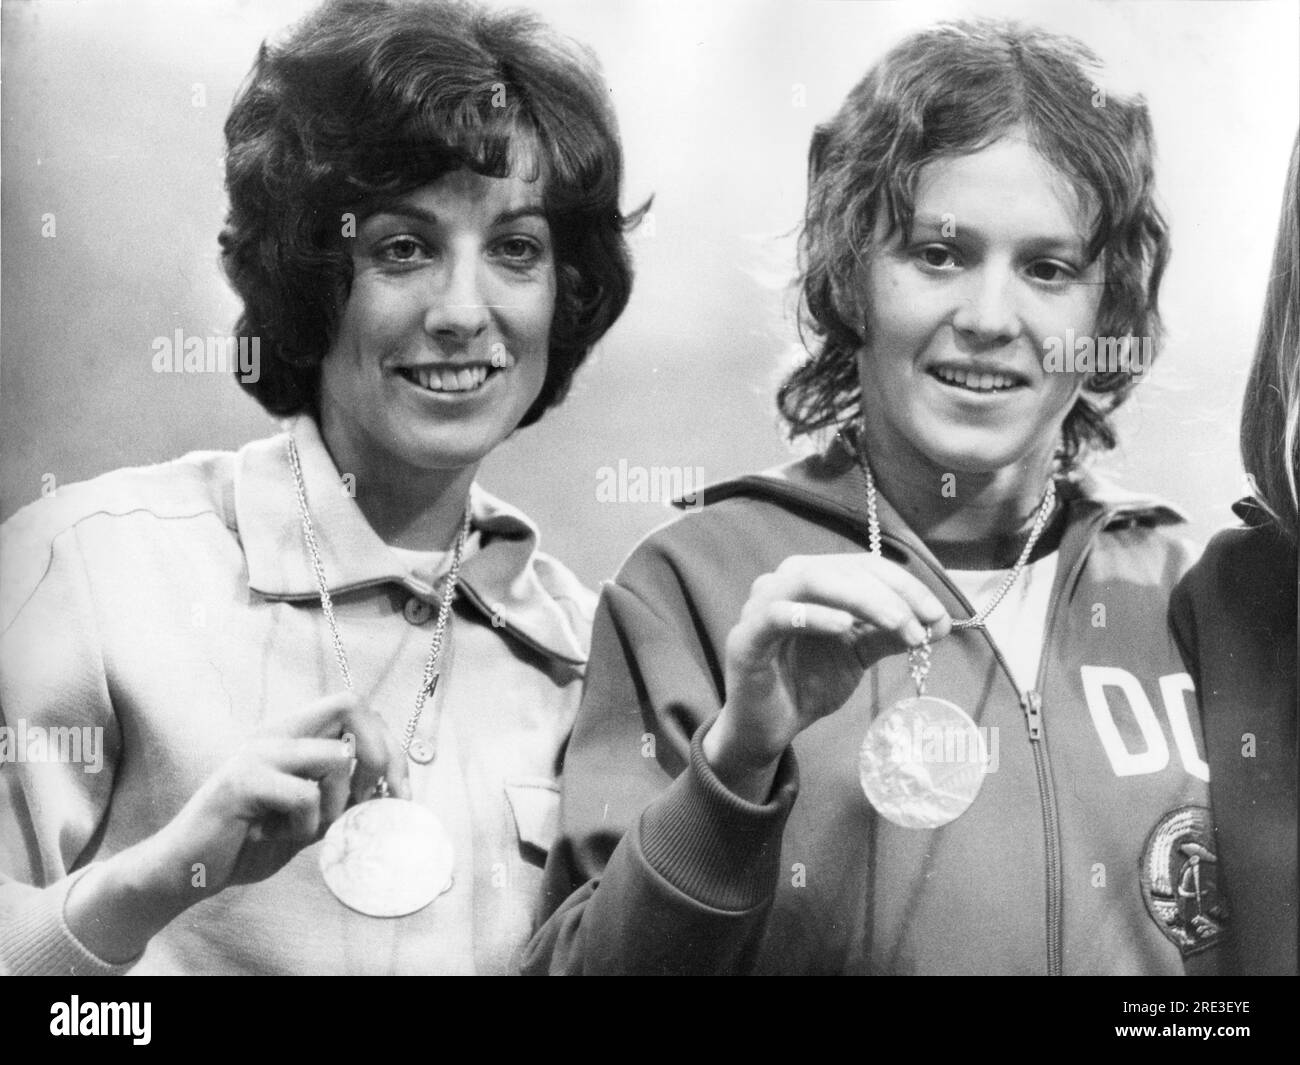 Wilden, Rita, * 8.10.1947, deutscher Sprinter (links), Silbermedaille im 400-Meter-Lauf, ADDITIONAL-RIGHTS-CLEARANCE-INFO-NOT-AVAILABLE Stockfoto